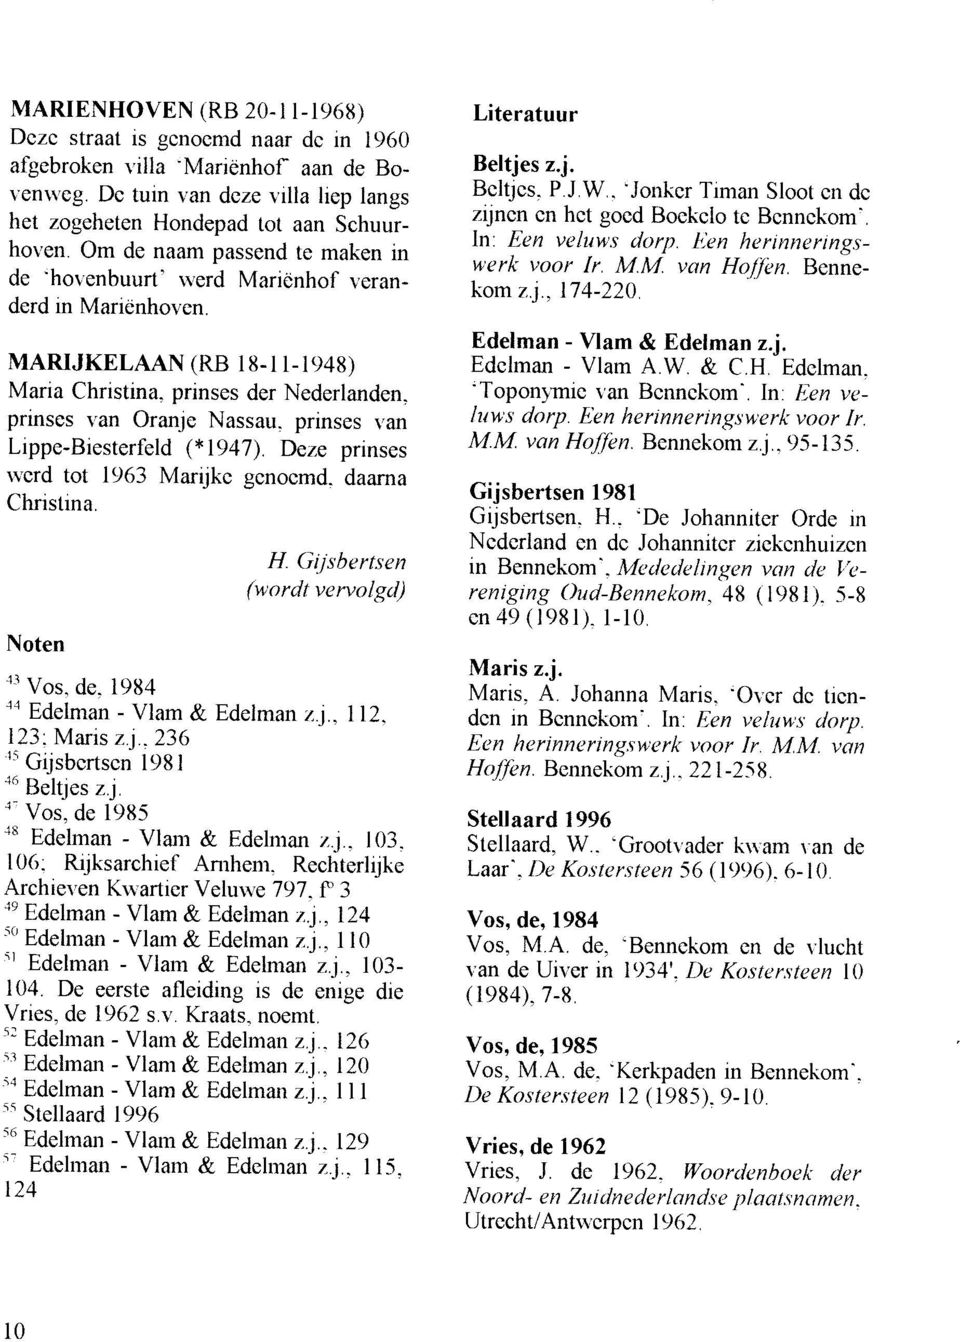 an Lippe-Biesterfeld (*1947). Deze prinses wcrd tot 1963 Marqkc gcnocmd. daama Christina. Noten H. Gijsbertsen (*-ordt vervolgd) 'r Vos. de. 19tt4 'o Edelman - Vlam & Edelman 2.i..ll2. 123: Maris 2.i..236 1s Ggsbcrtscn tqs t o" { Beltles z.